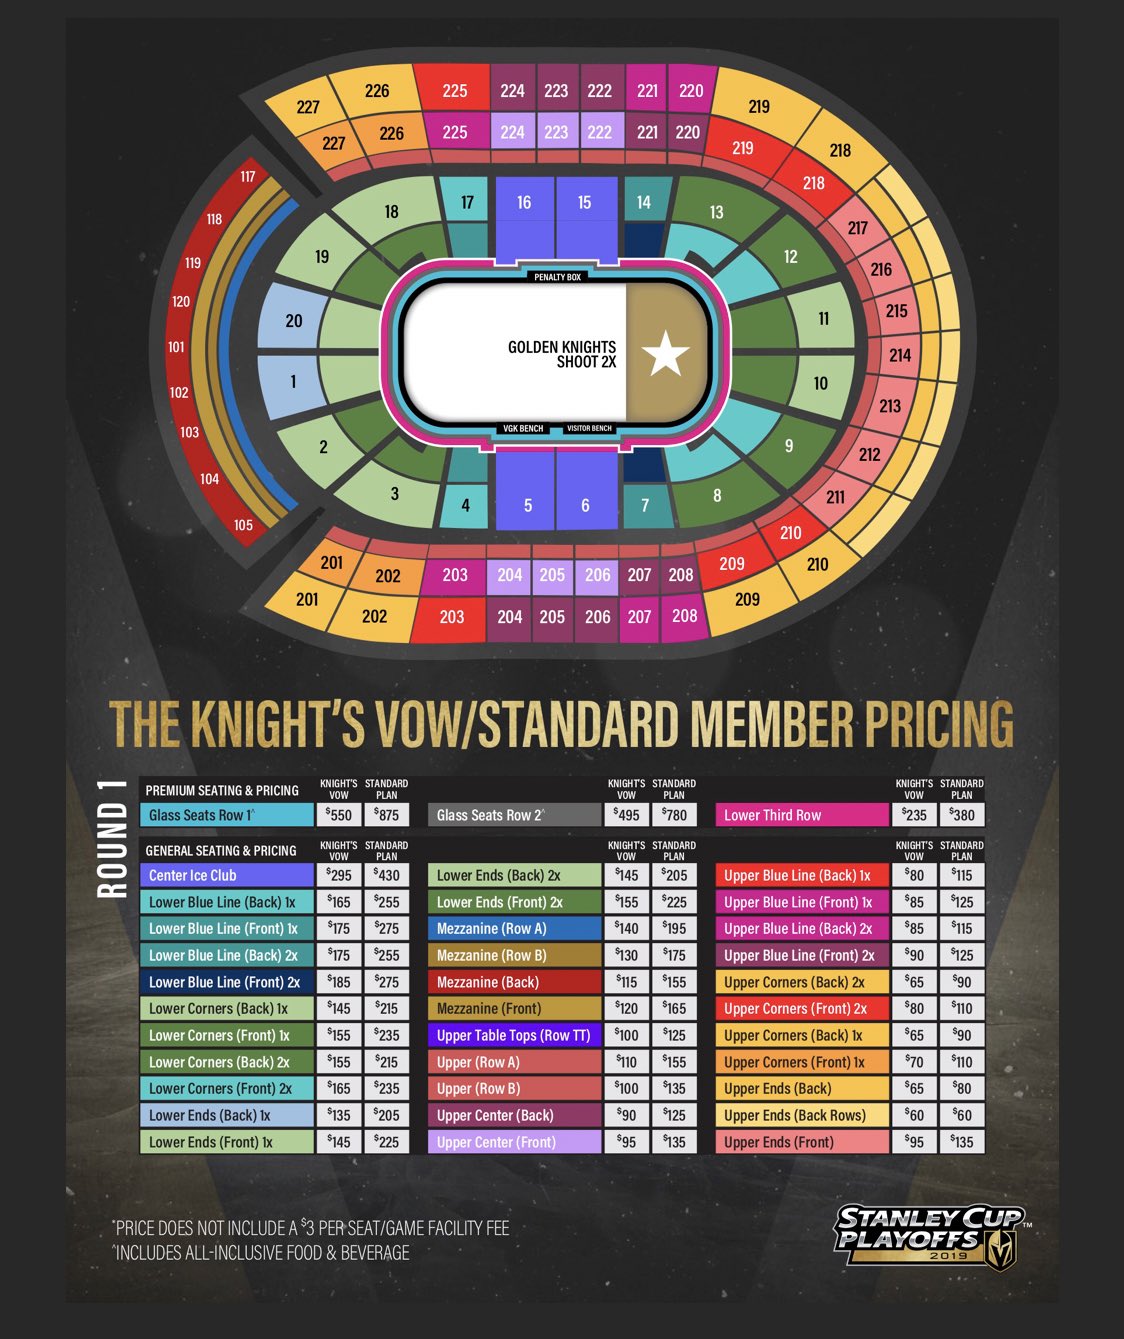 Tickets, Vegas Golden Knights